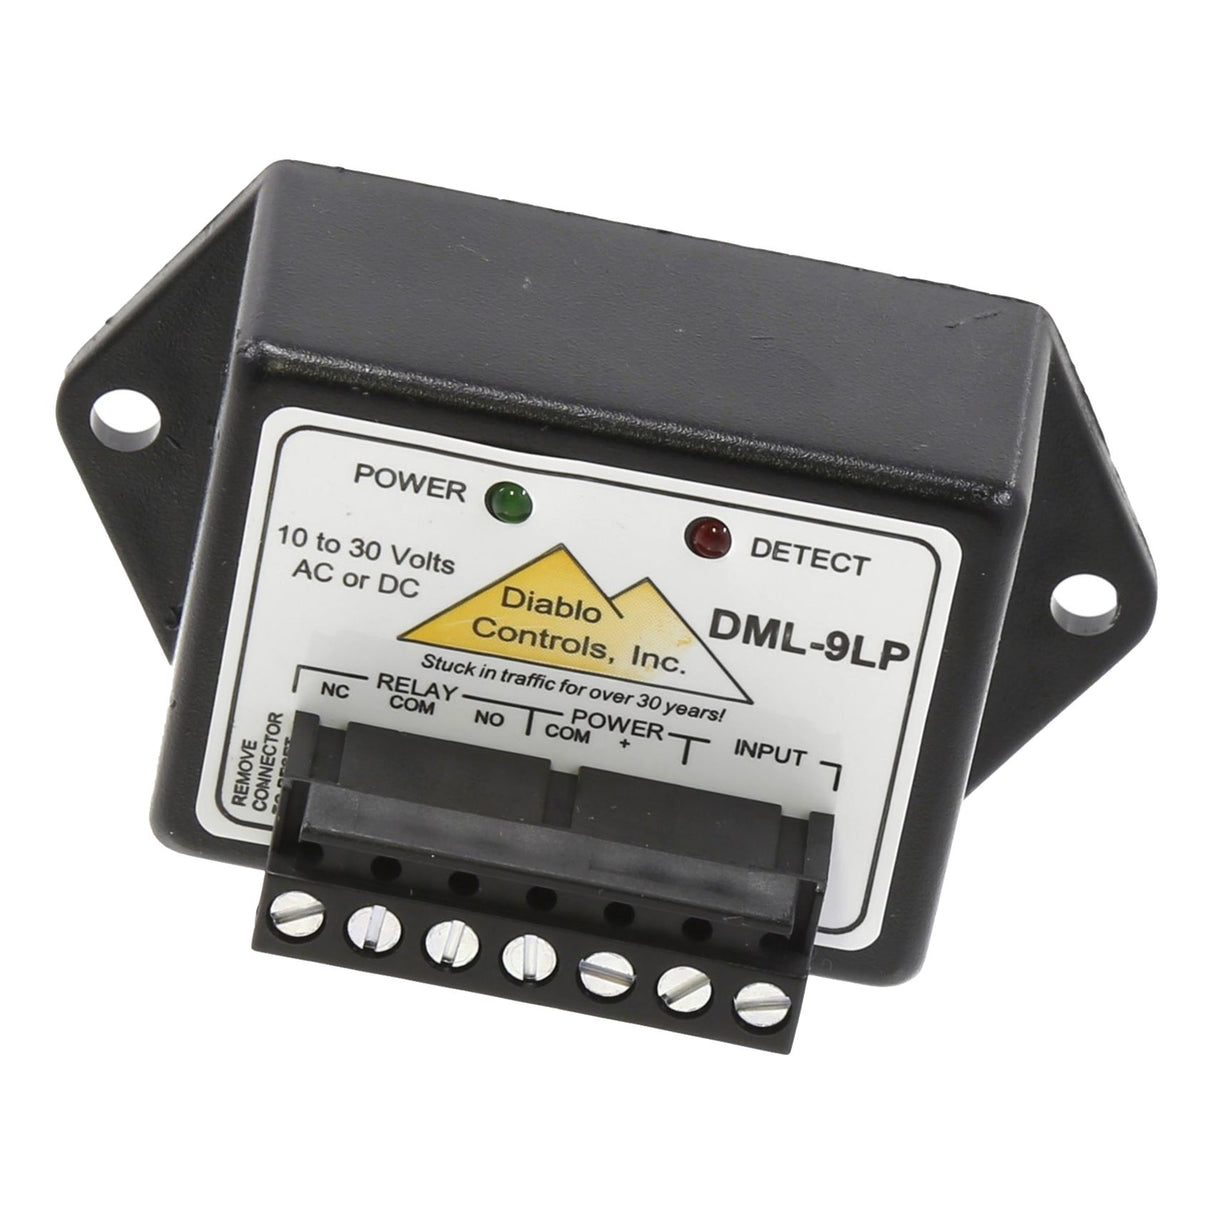 Diablo DML-9LP Low Power Exit Probe Vehicle Detector